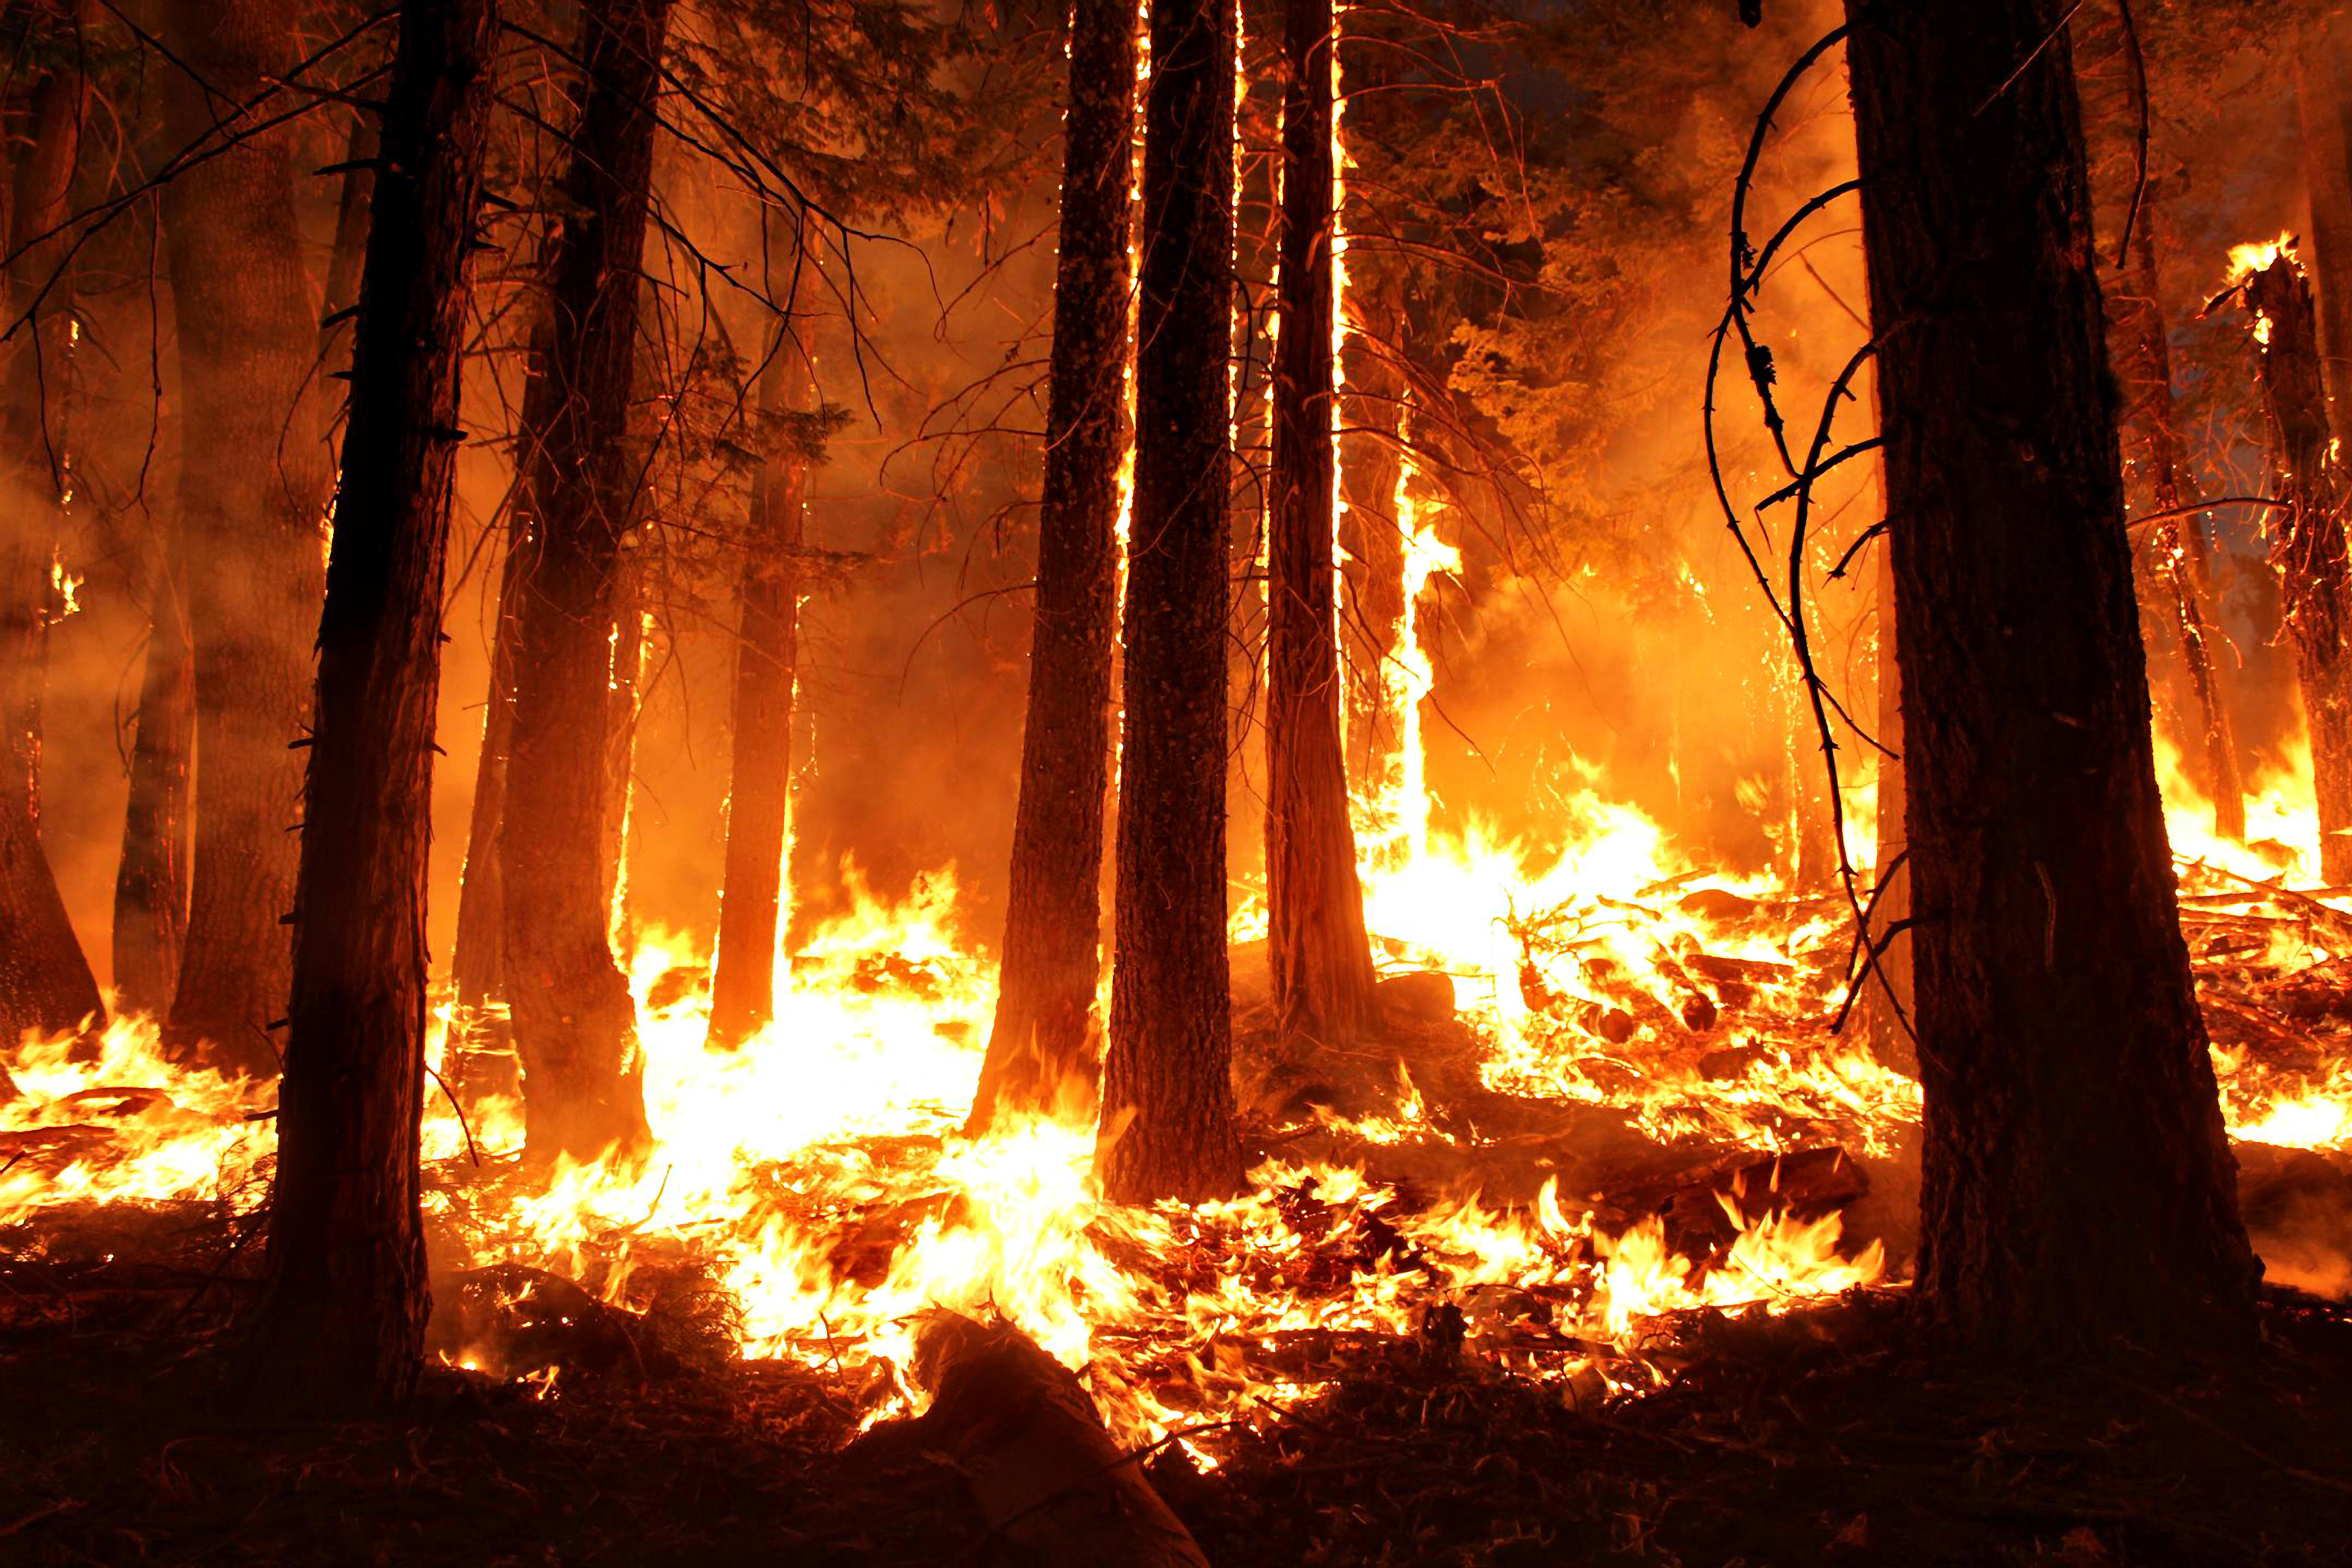 tress burn in a wild fire